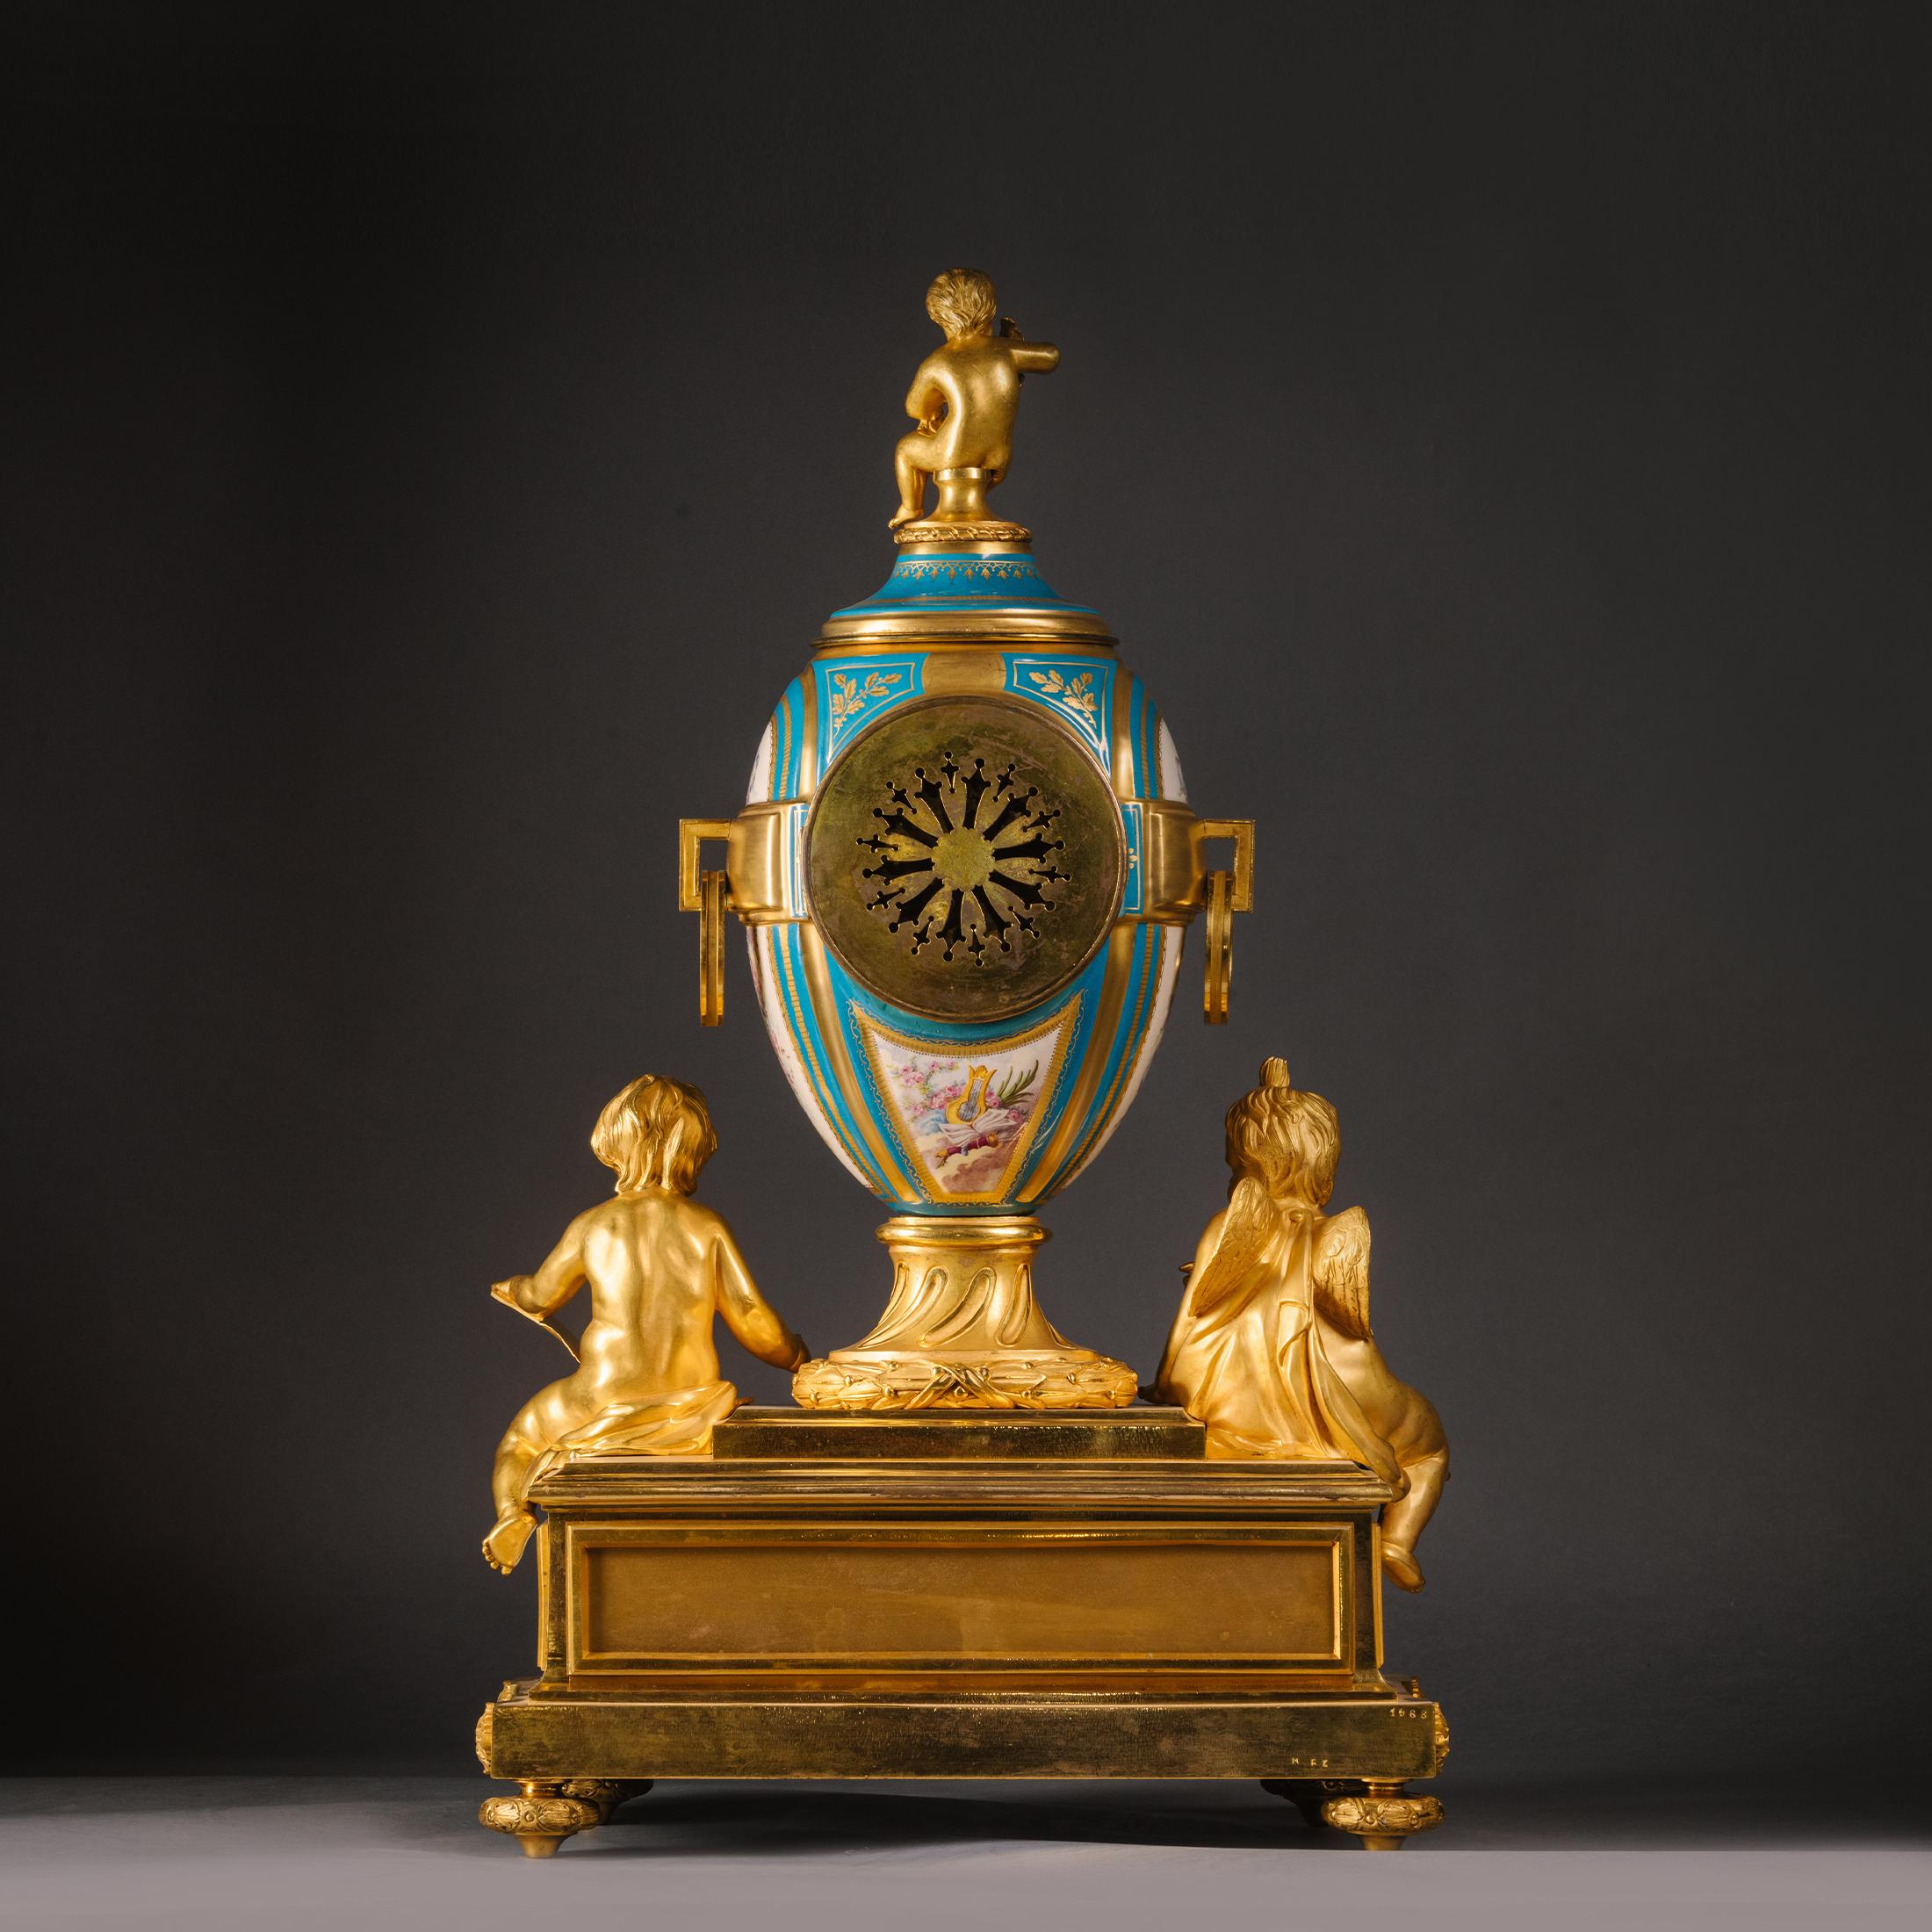 French Louis XVI Style and Sèvres Style Porcelain Mantel Clock by Raingo Frères For Sale